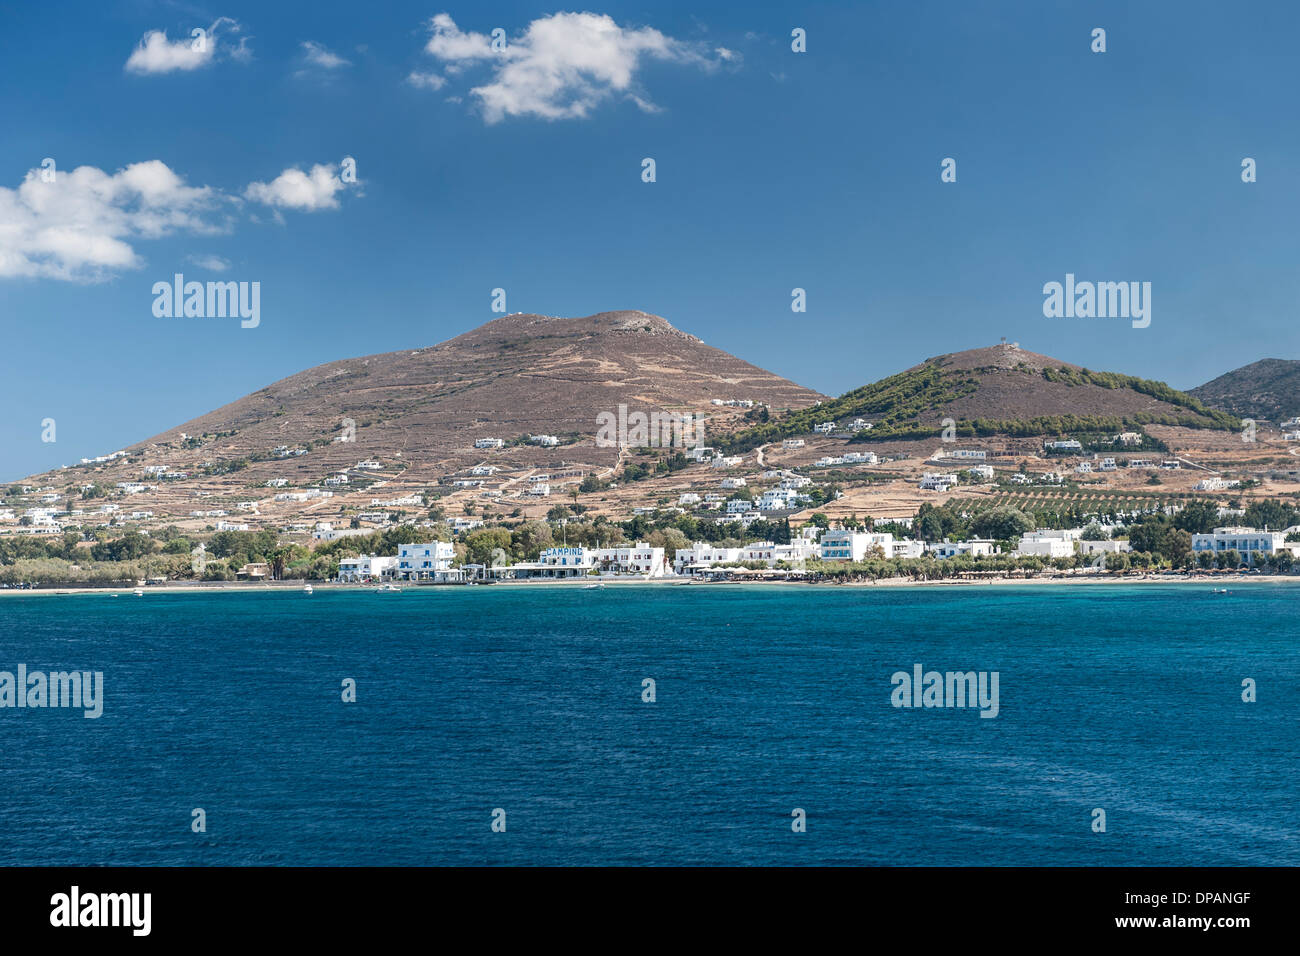 The Greek island of Paros in the Aegean Sea. Stock Photo